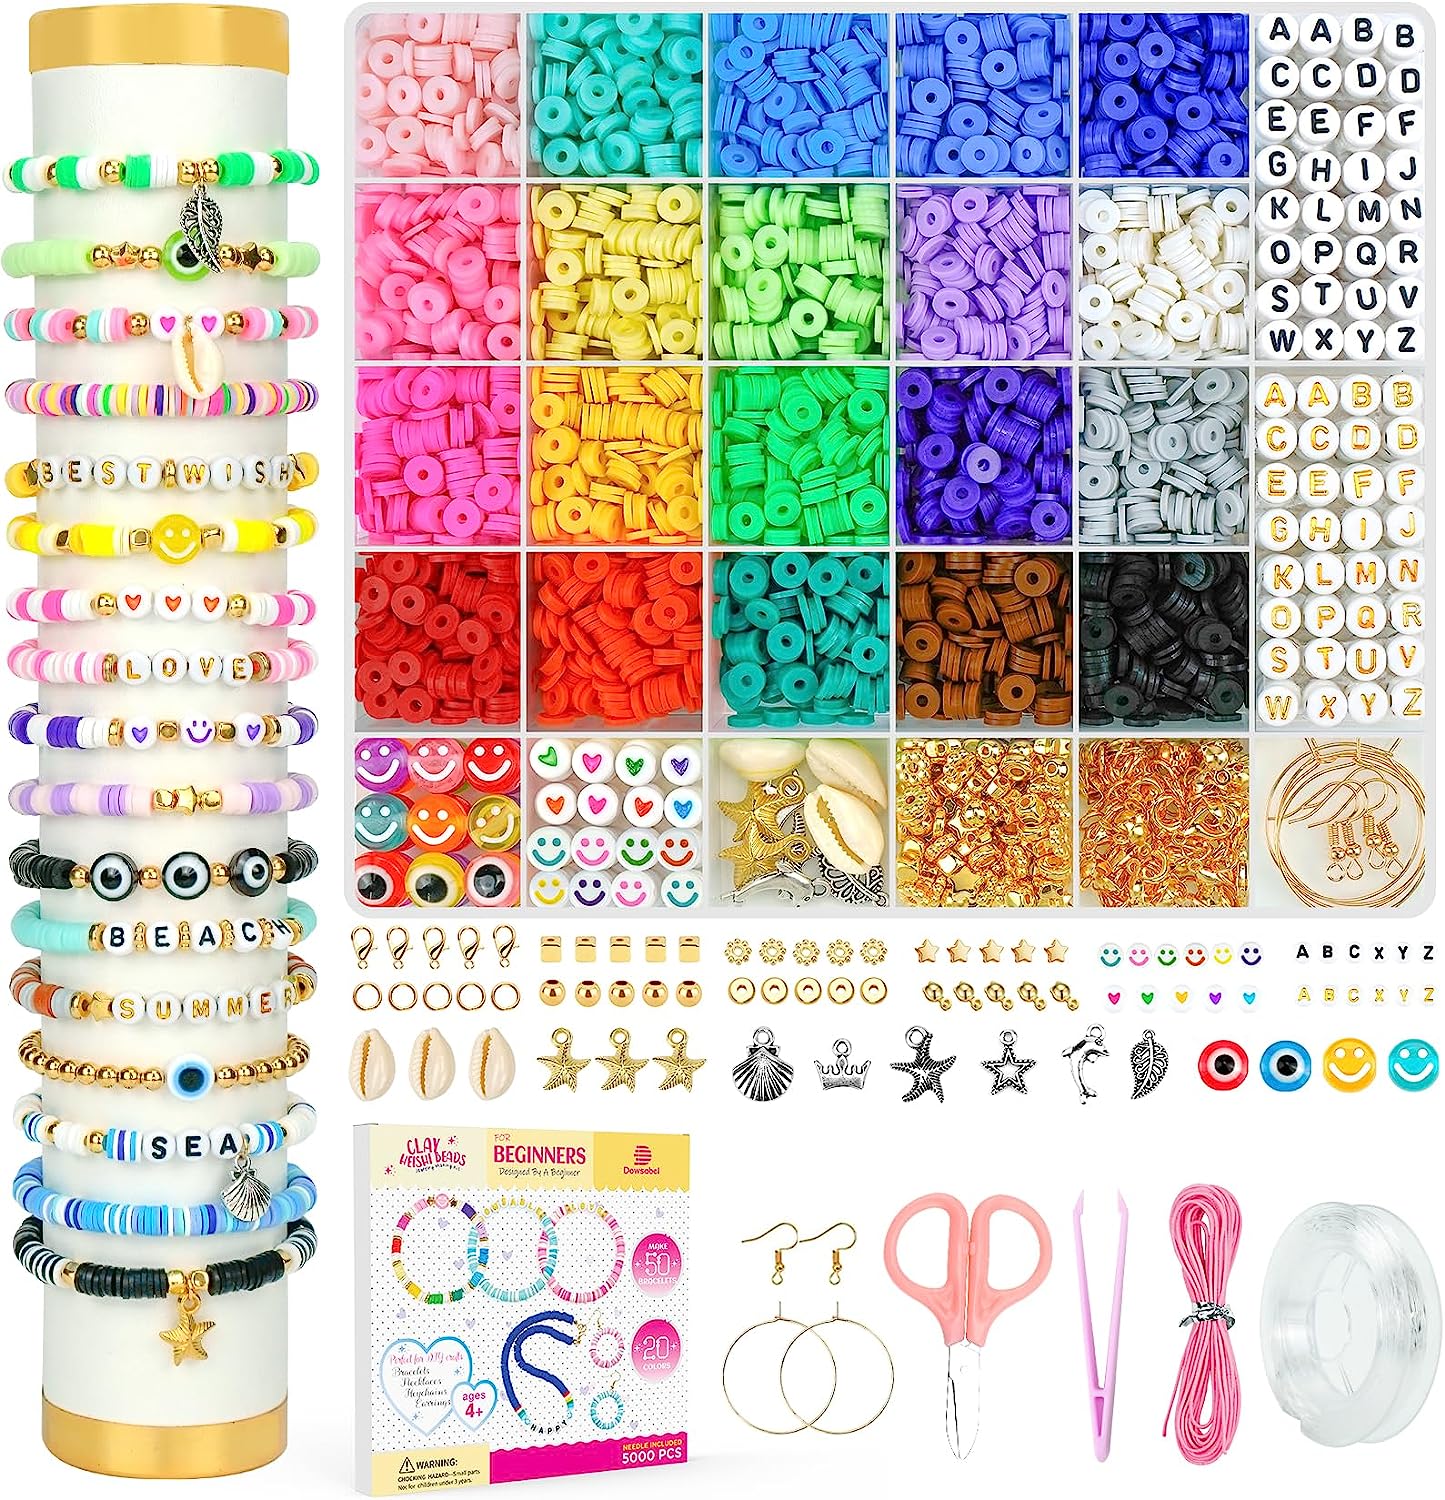  Redtwo 7200 Pcs Clay Beads Bracelet Making Kit, Preppy